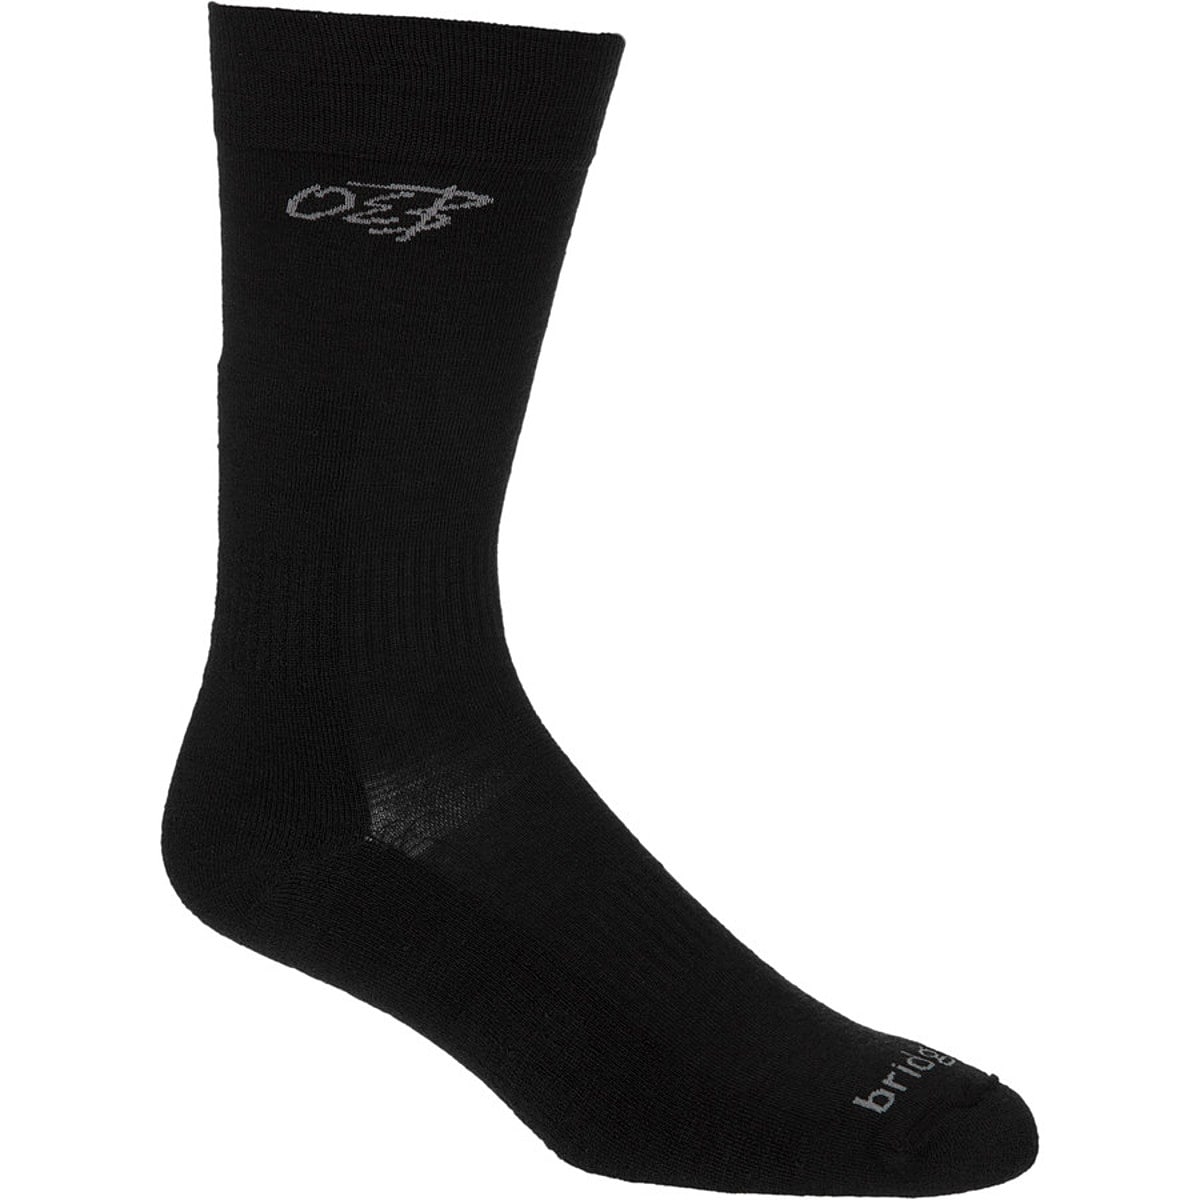 Boot Height Merino Performance Ski Socks Details about   Bridgedale Men's Cross Country 